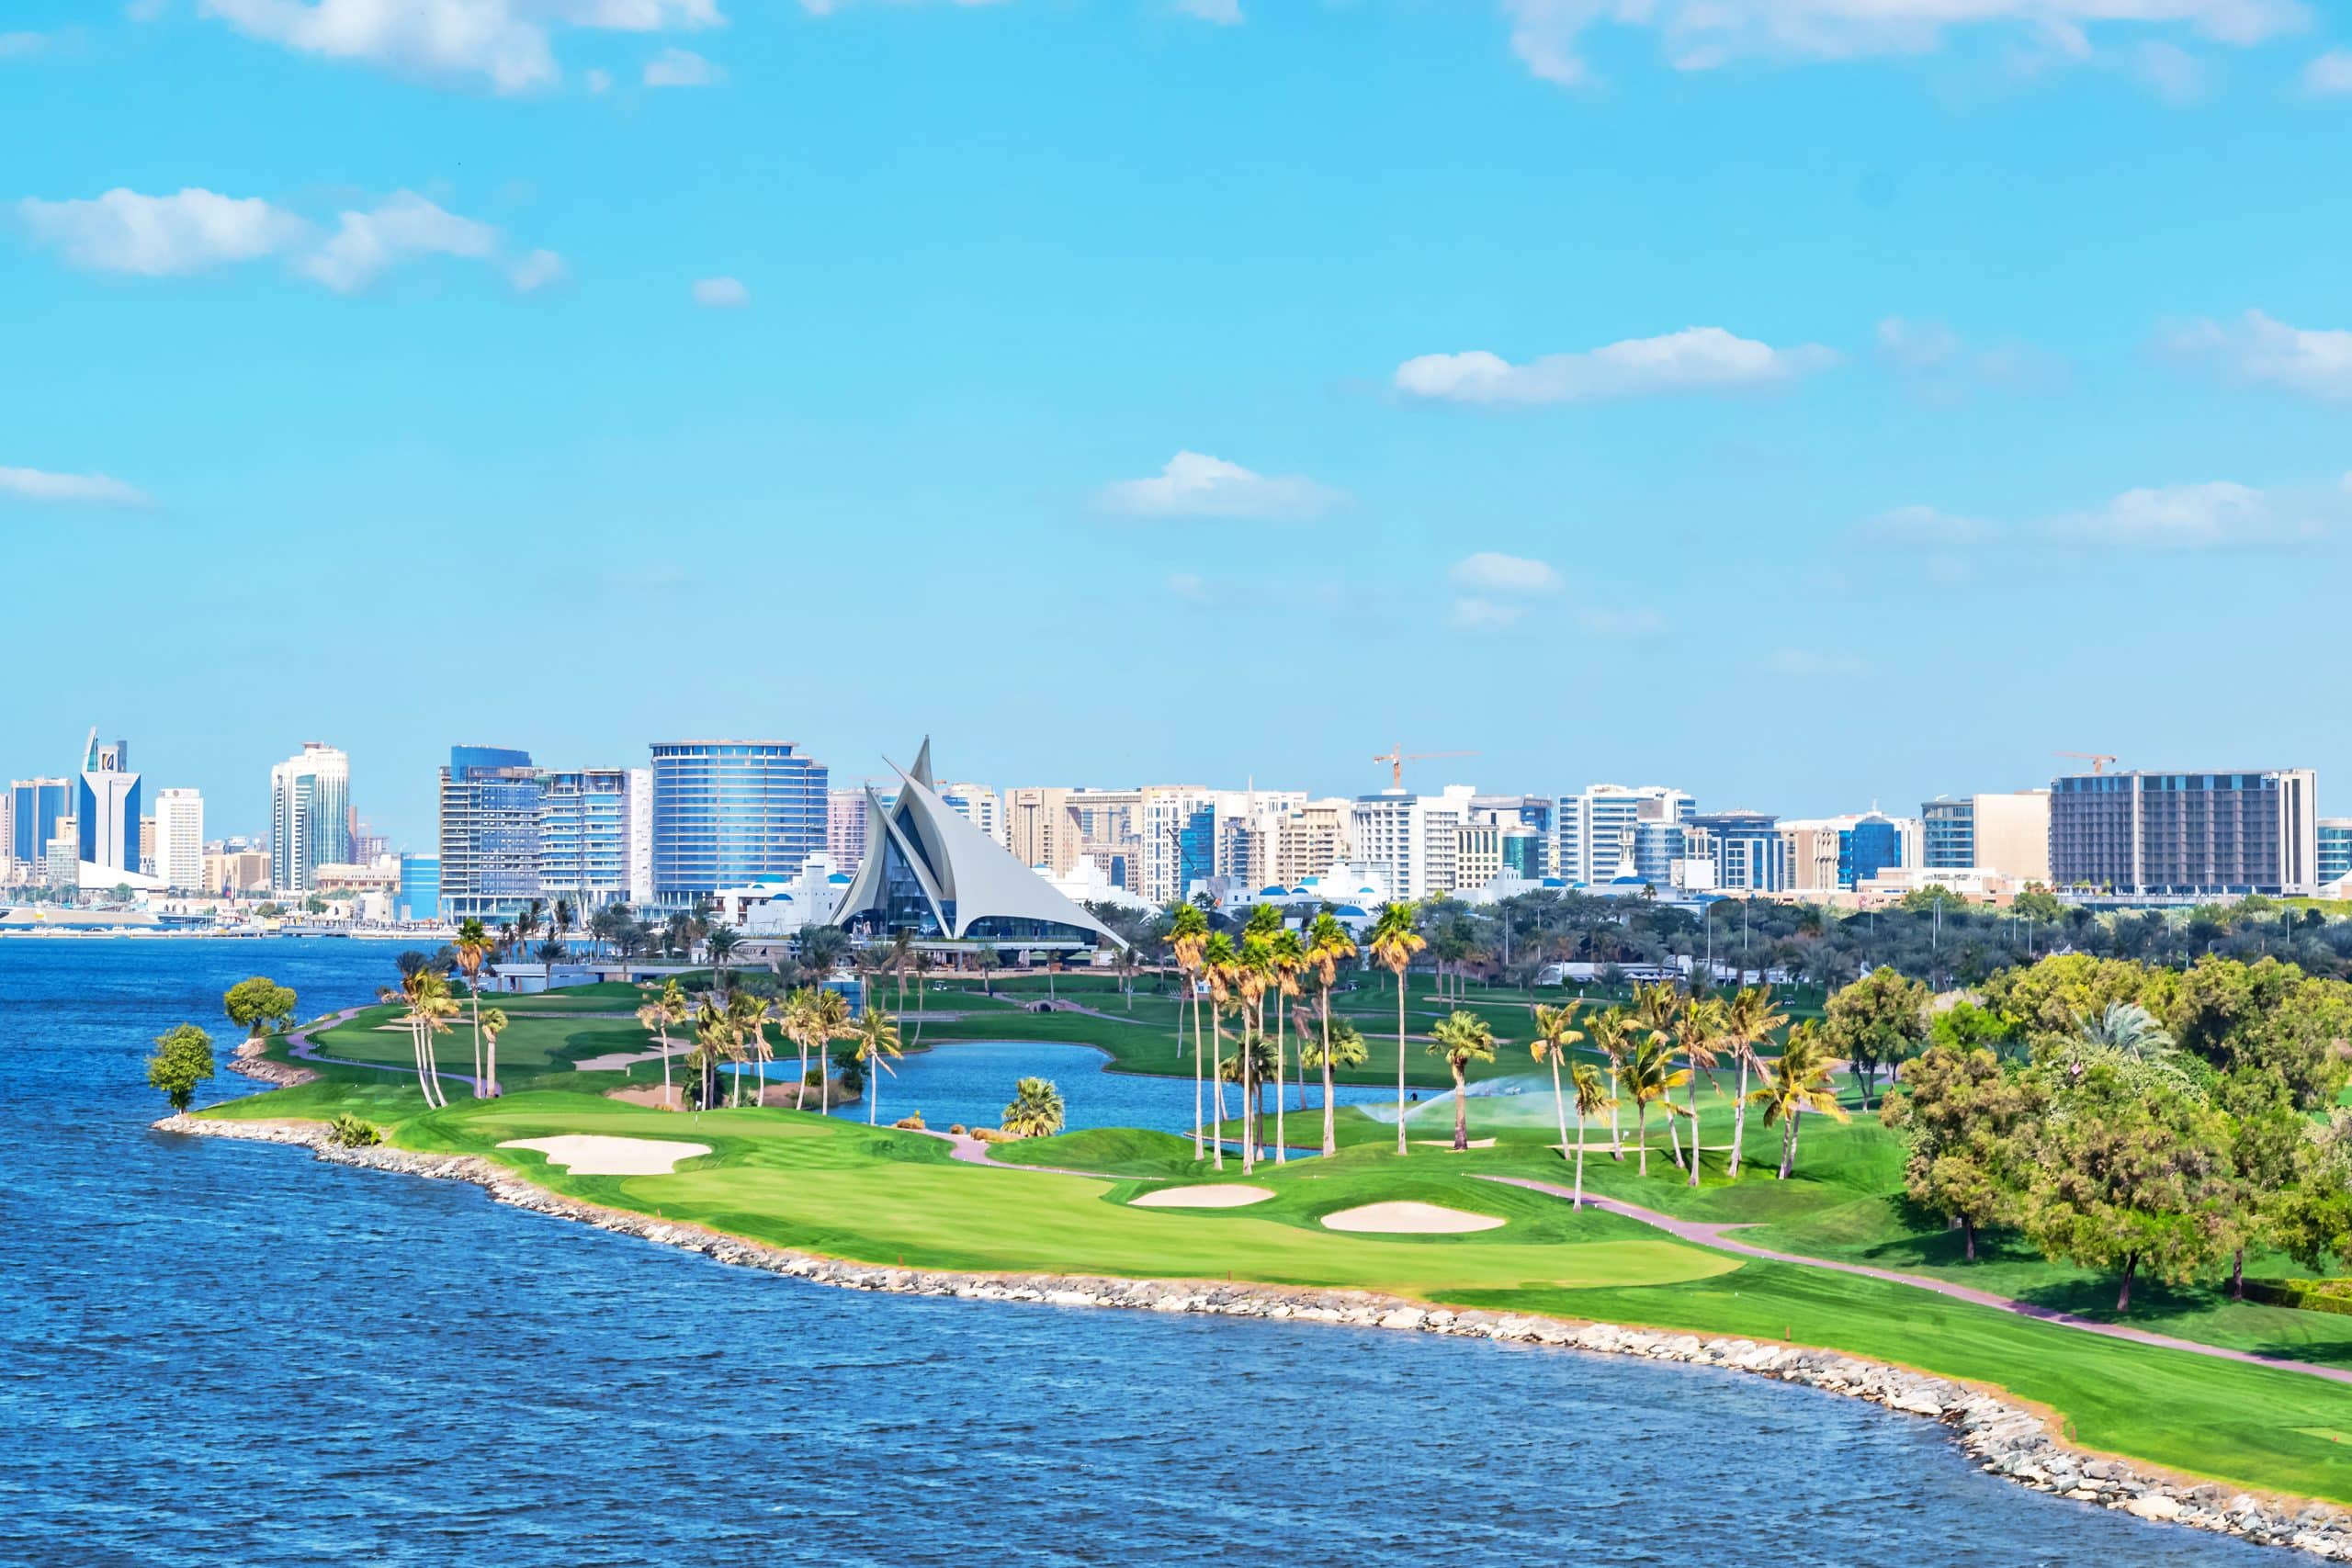 Dubai Golf and Yacht club with its green and lush golfcourse at the Dubai Creek.